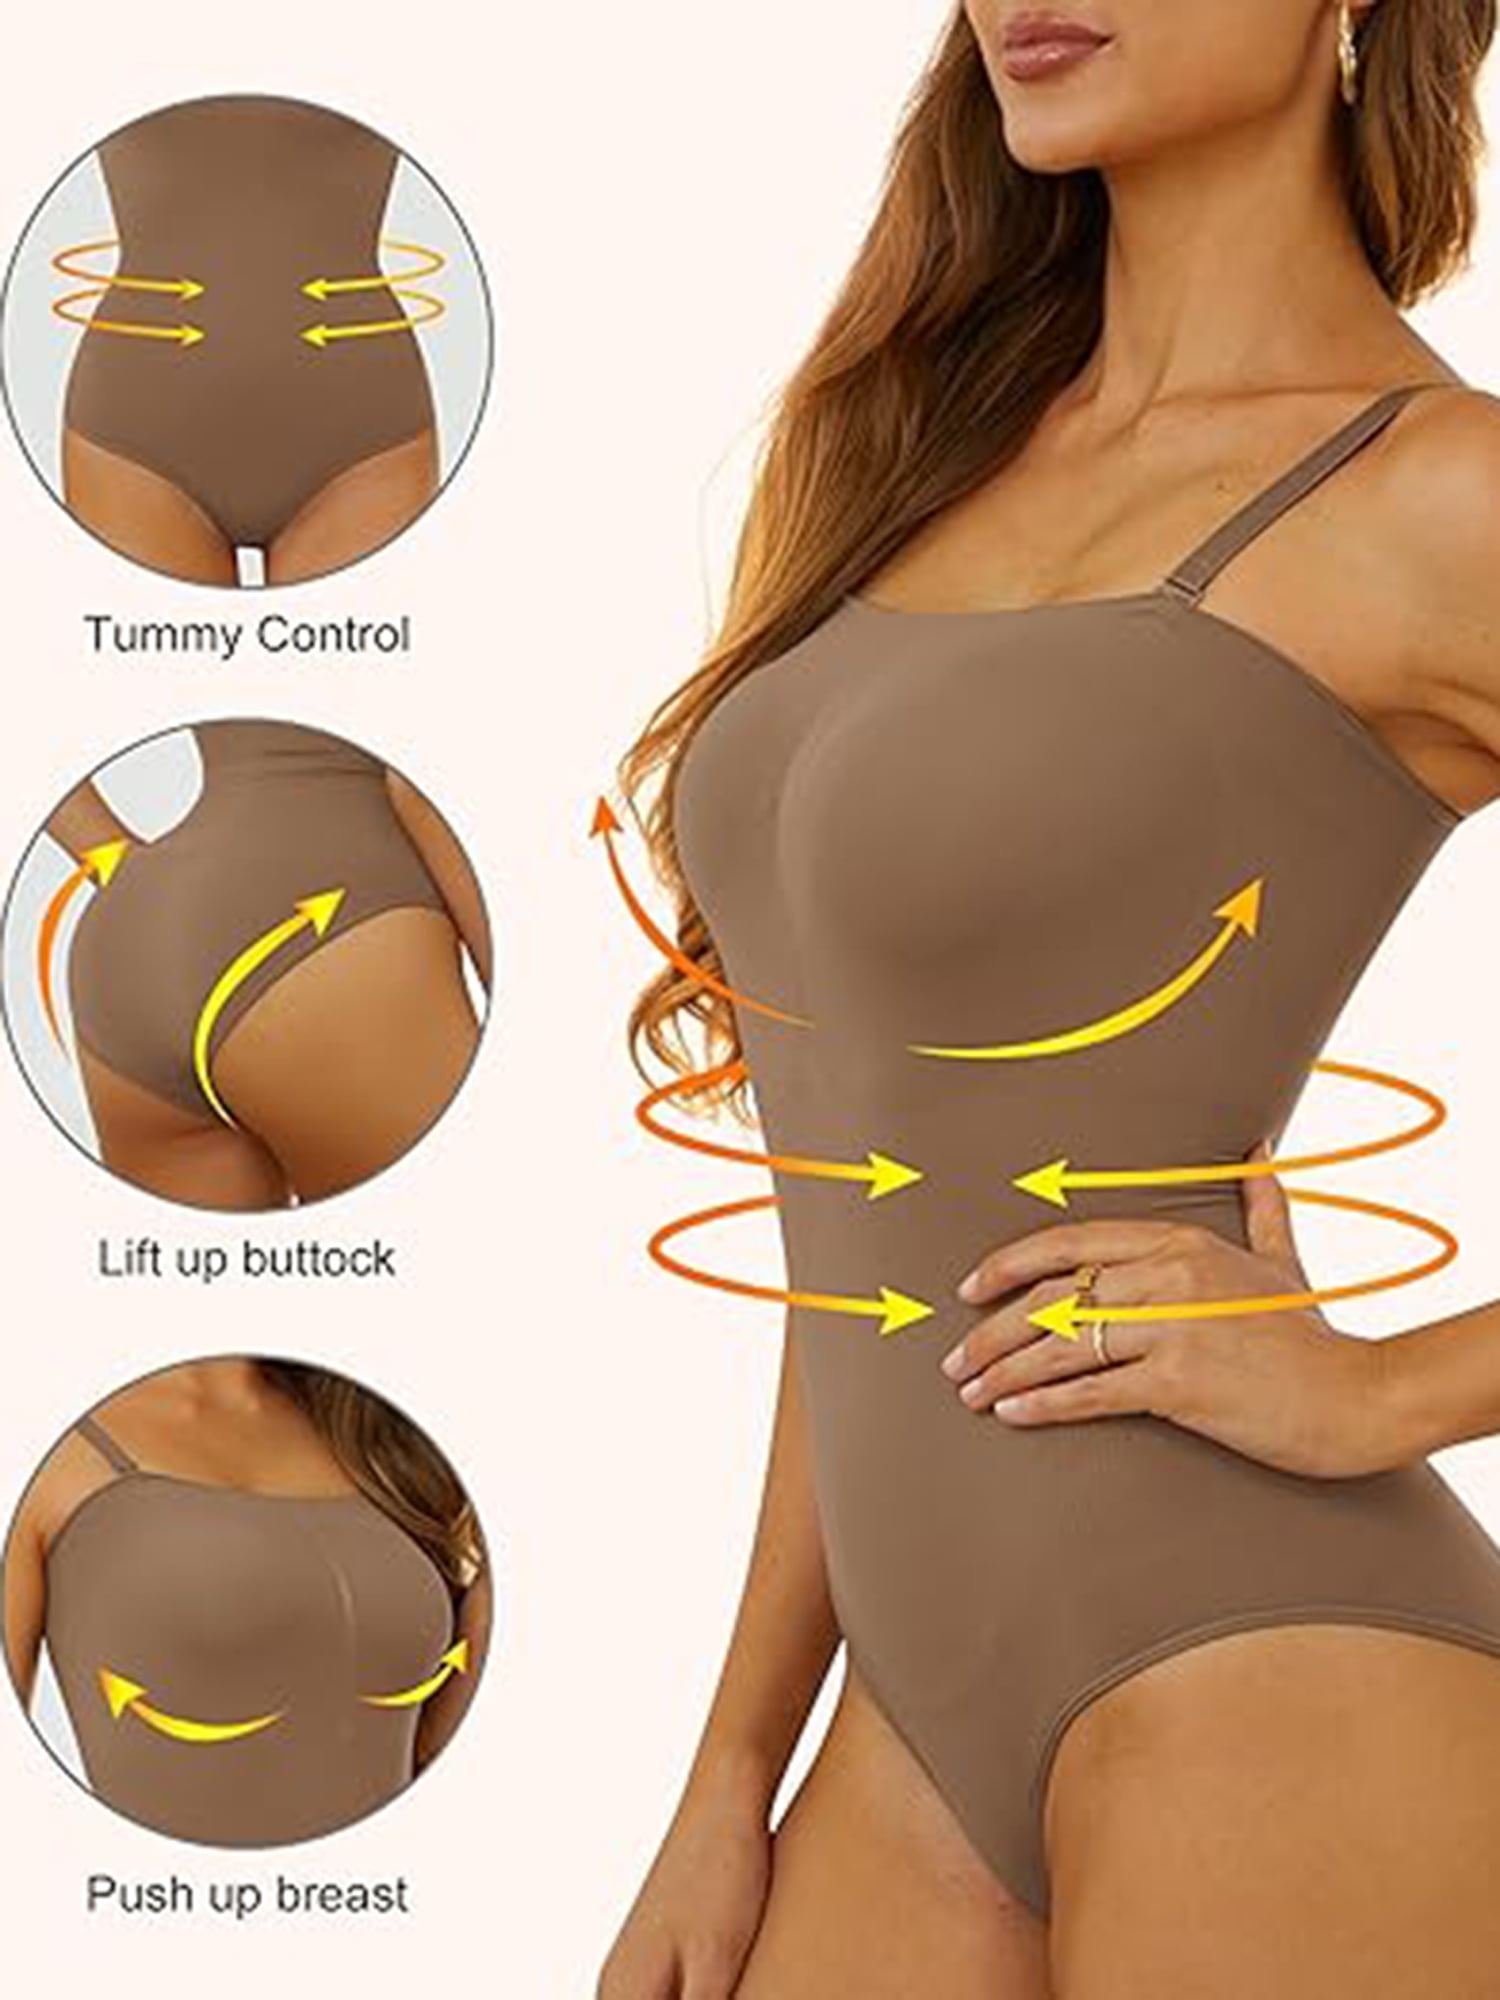  SHAPERX Strapless Bodysuit For Women Tummy Control